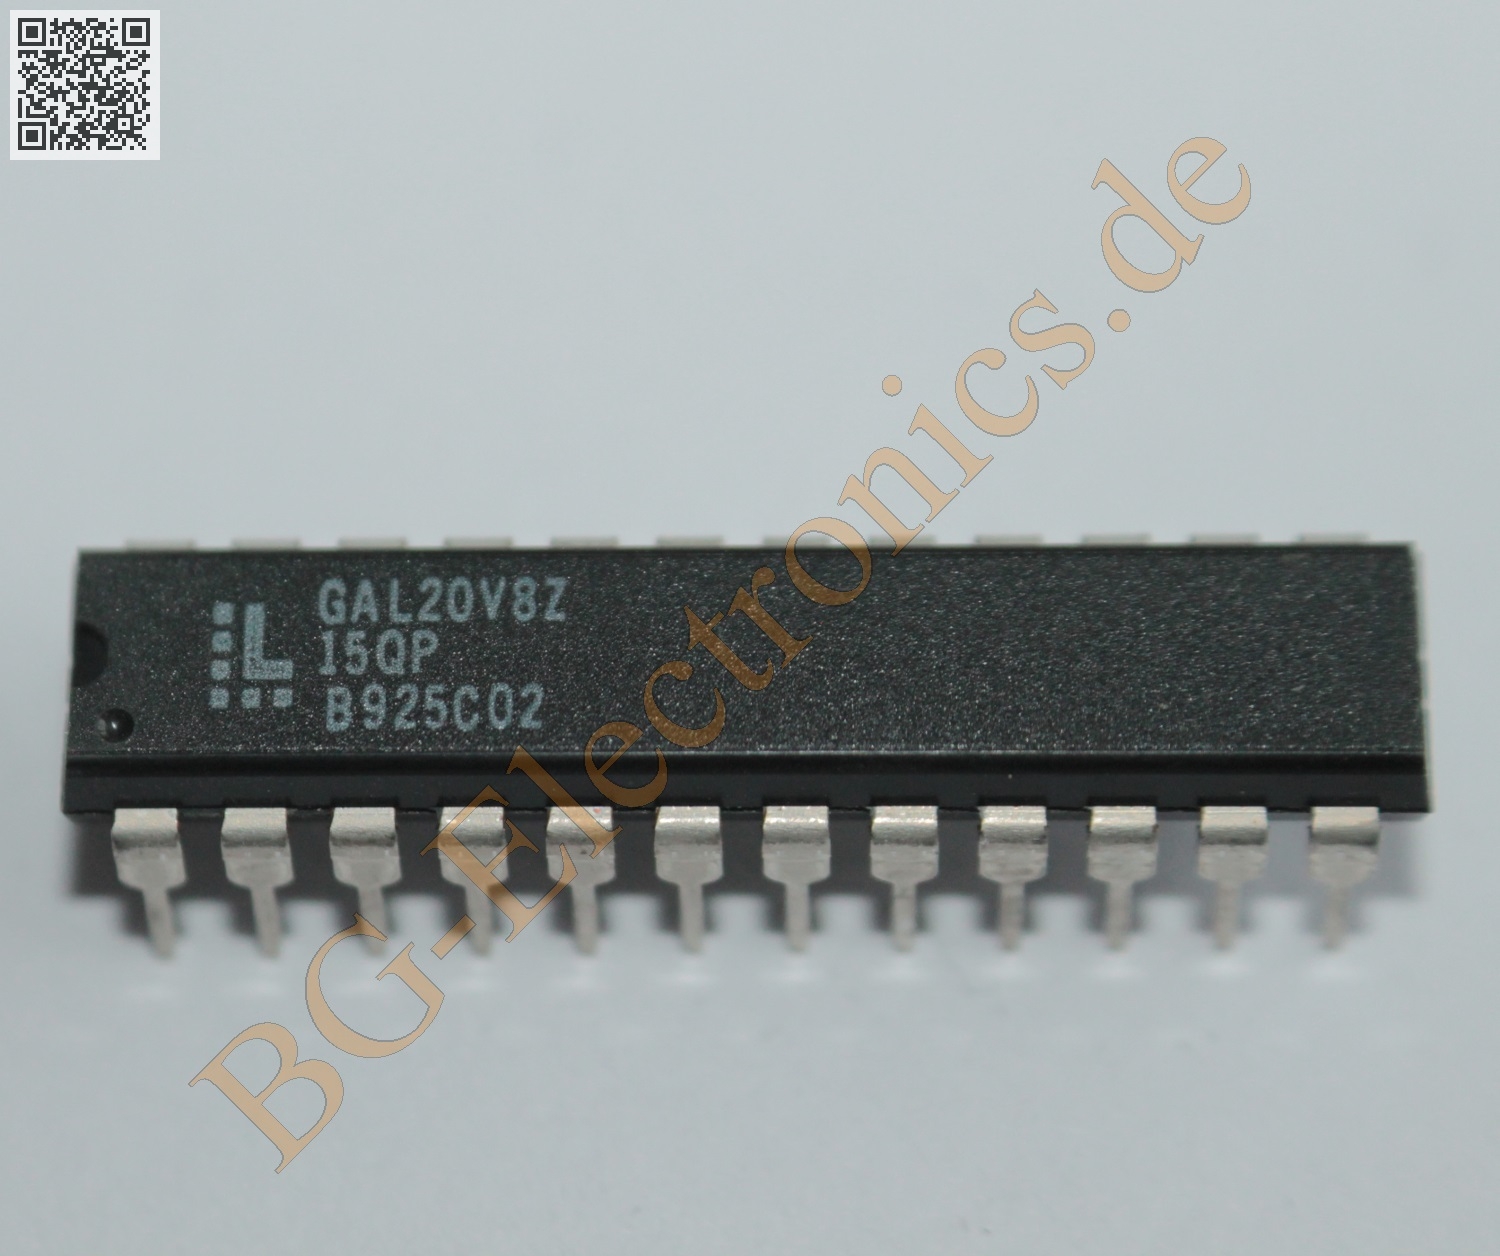 GAL20V8Z-15QP